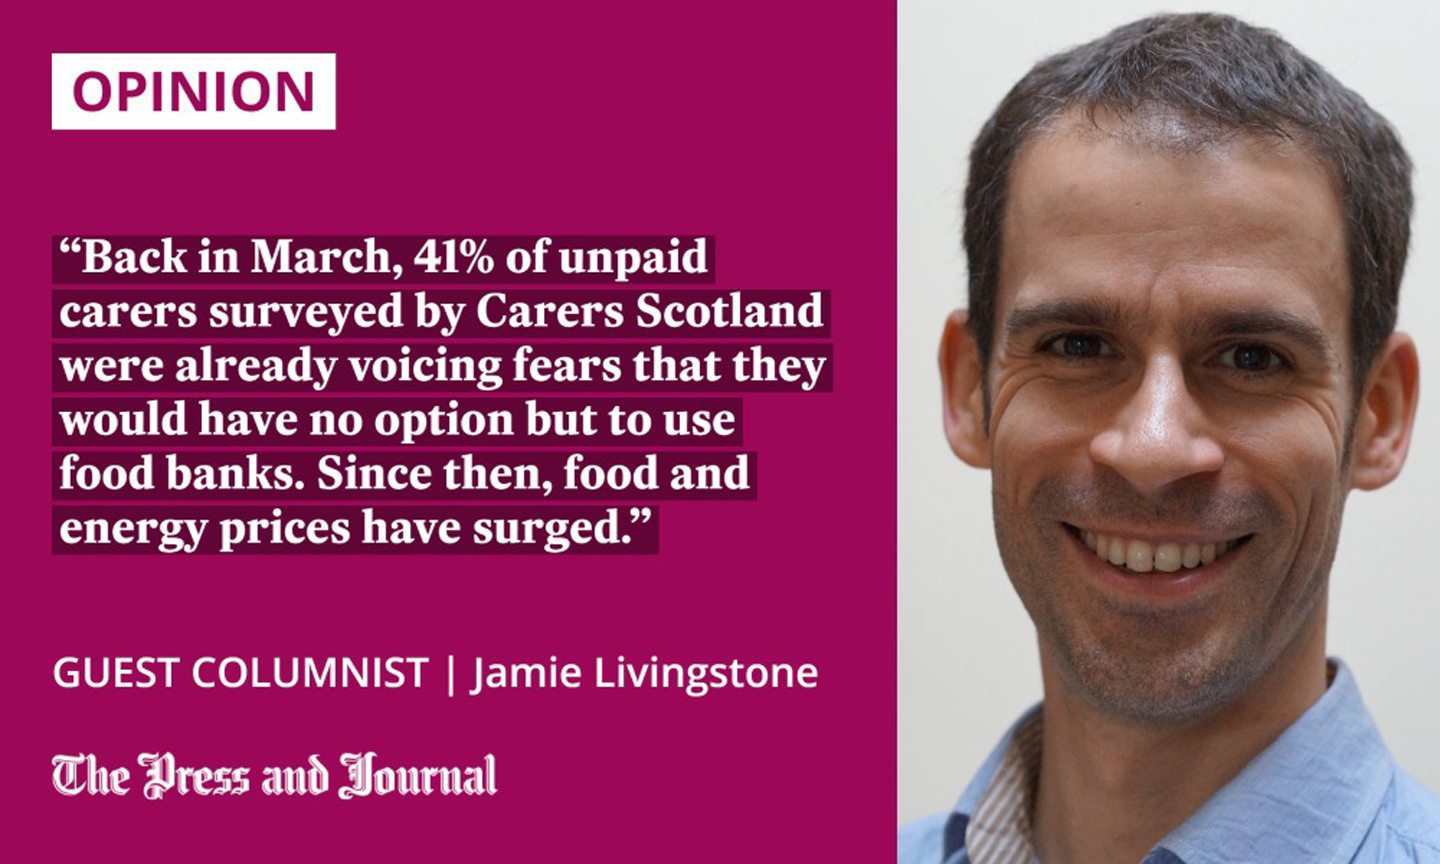 Guest columnist, Jamie Livingston